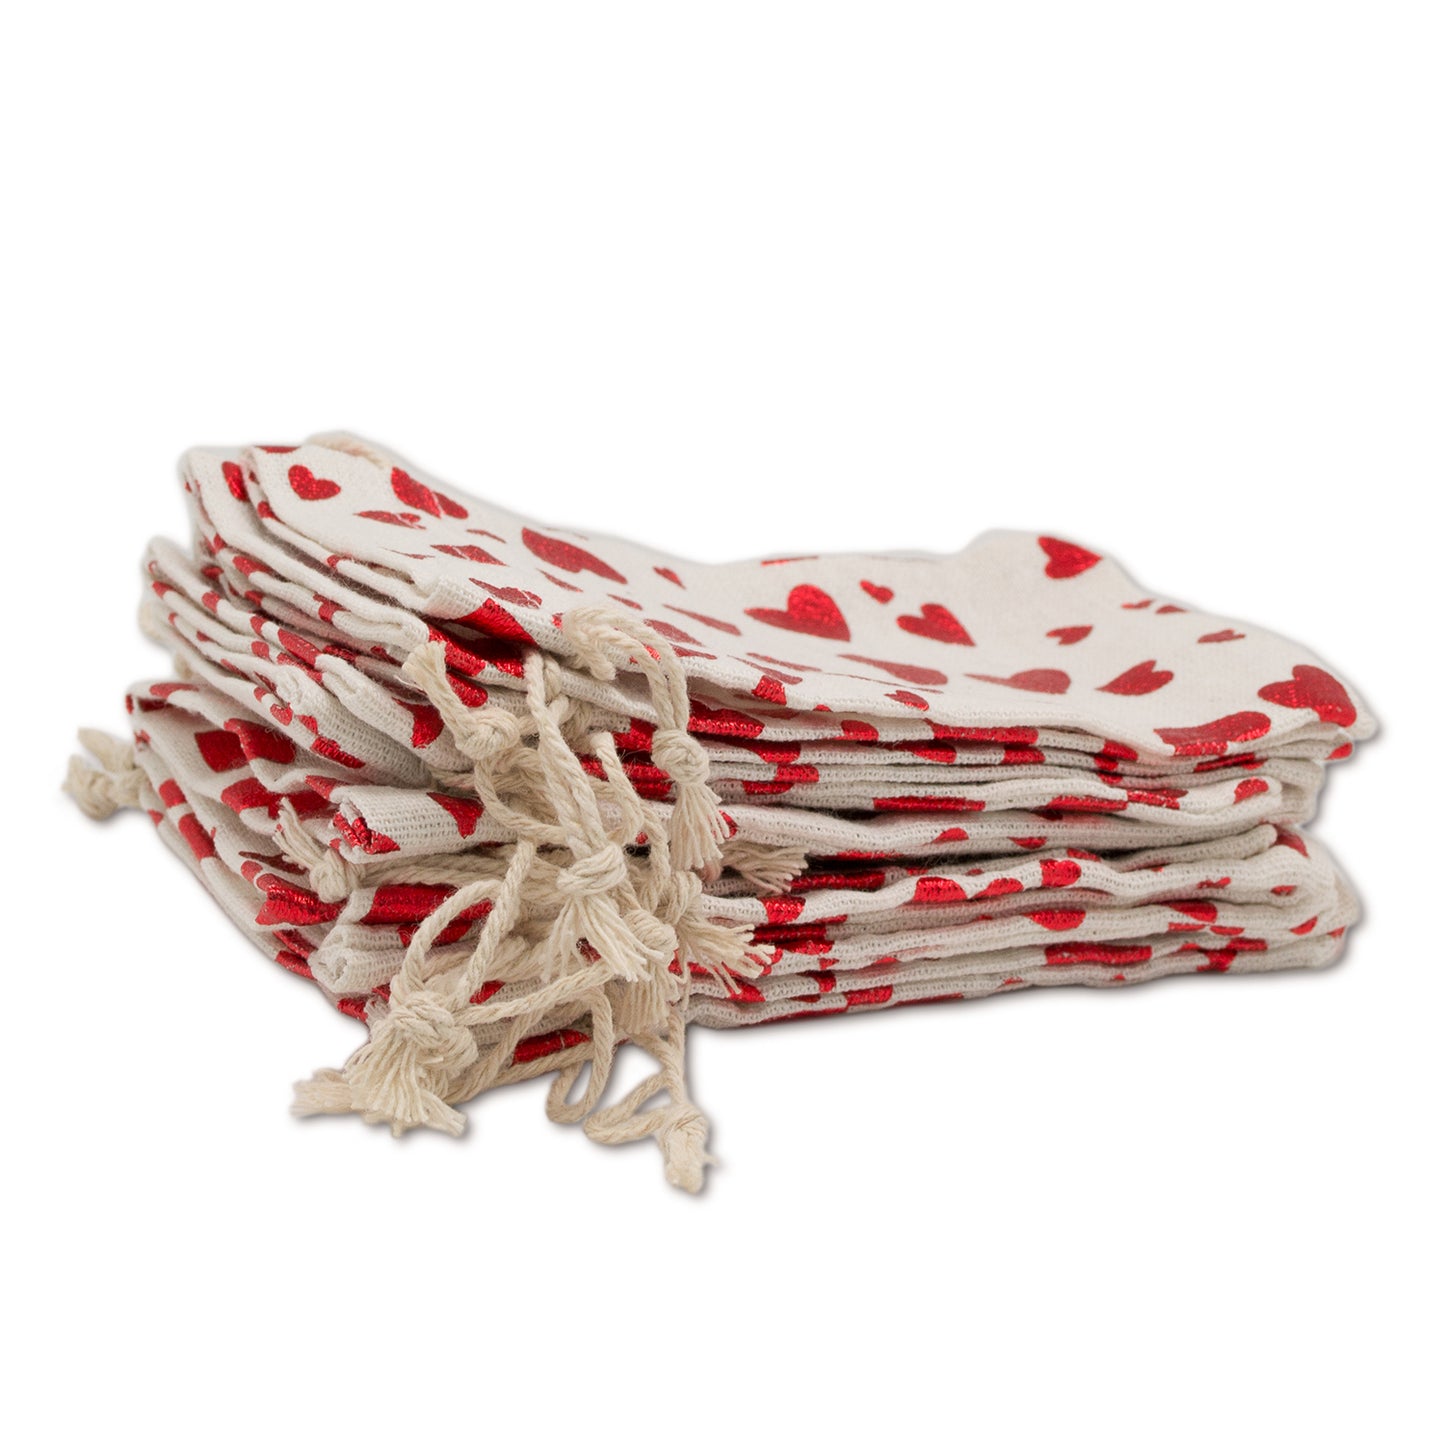 6" x 8" Cotton Muslin Red Heart Drawstring Gift Bags